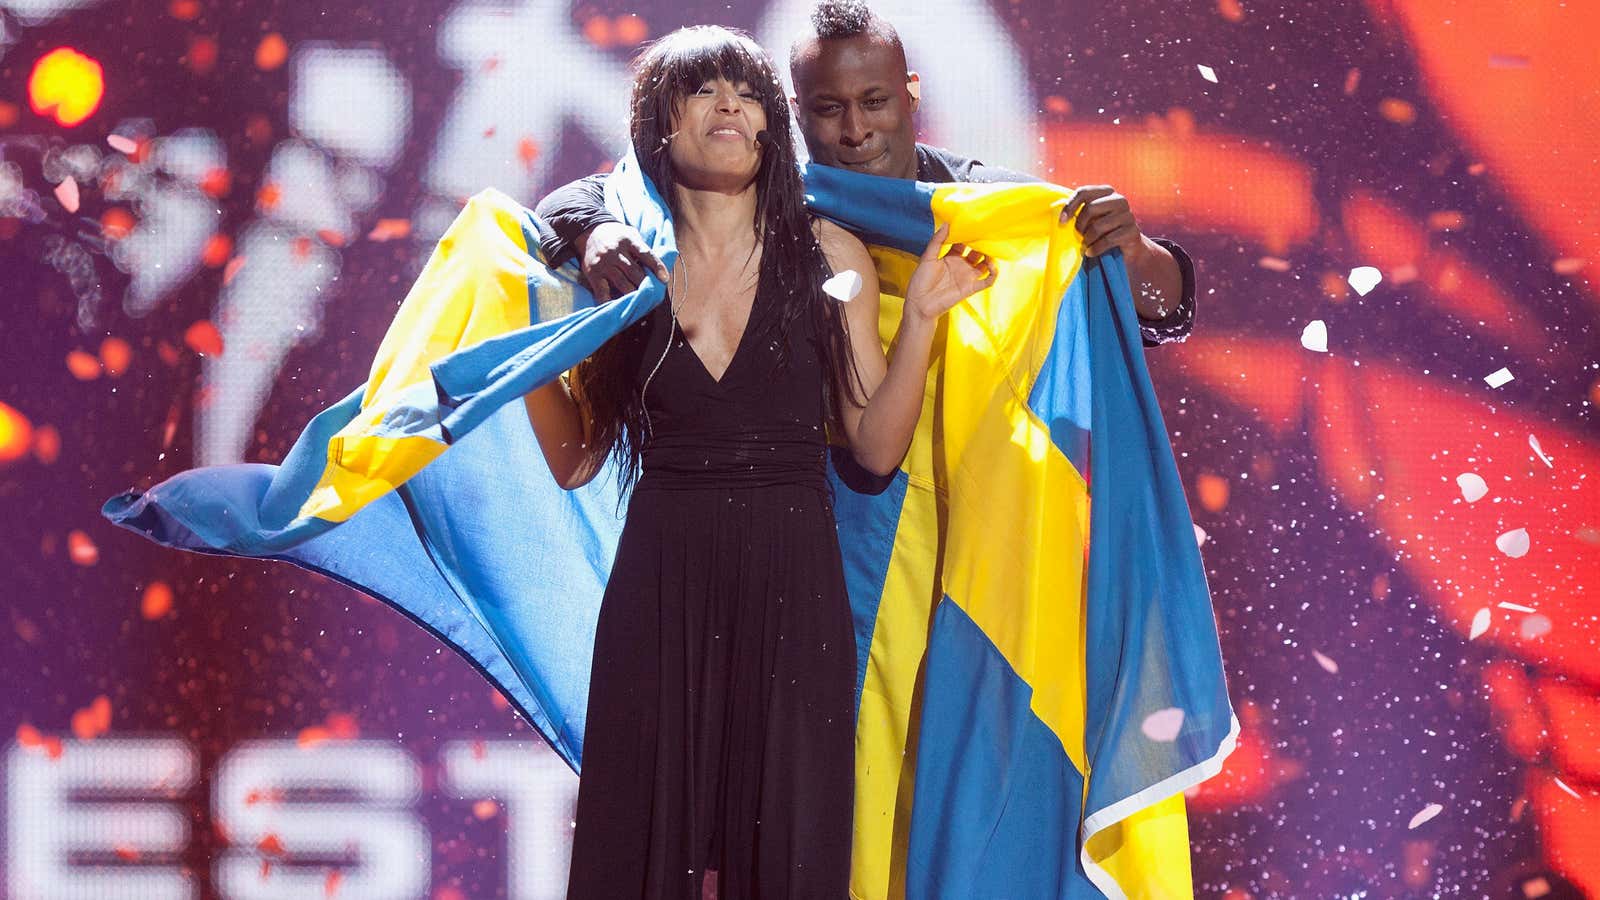 Swedish singer Loreen won the contest in 2012.